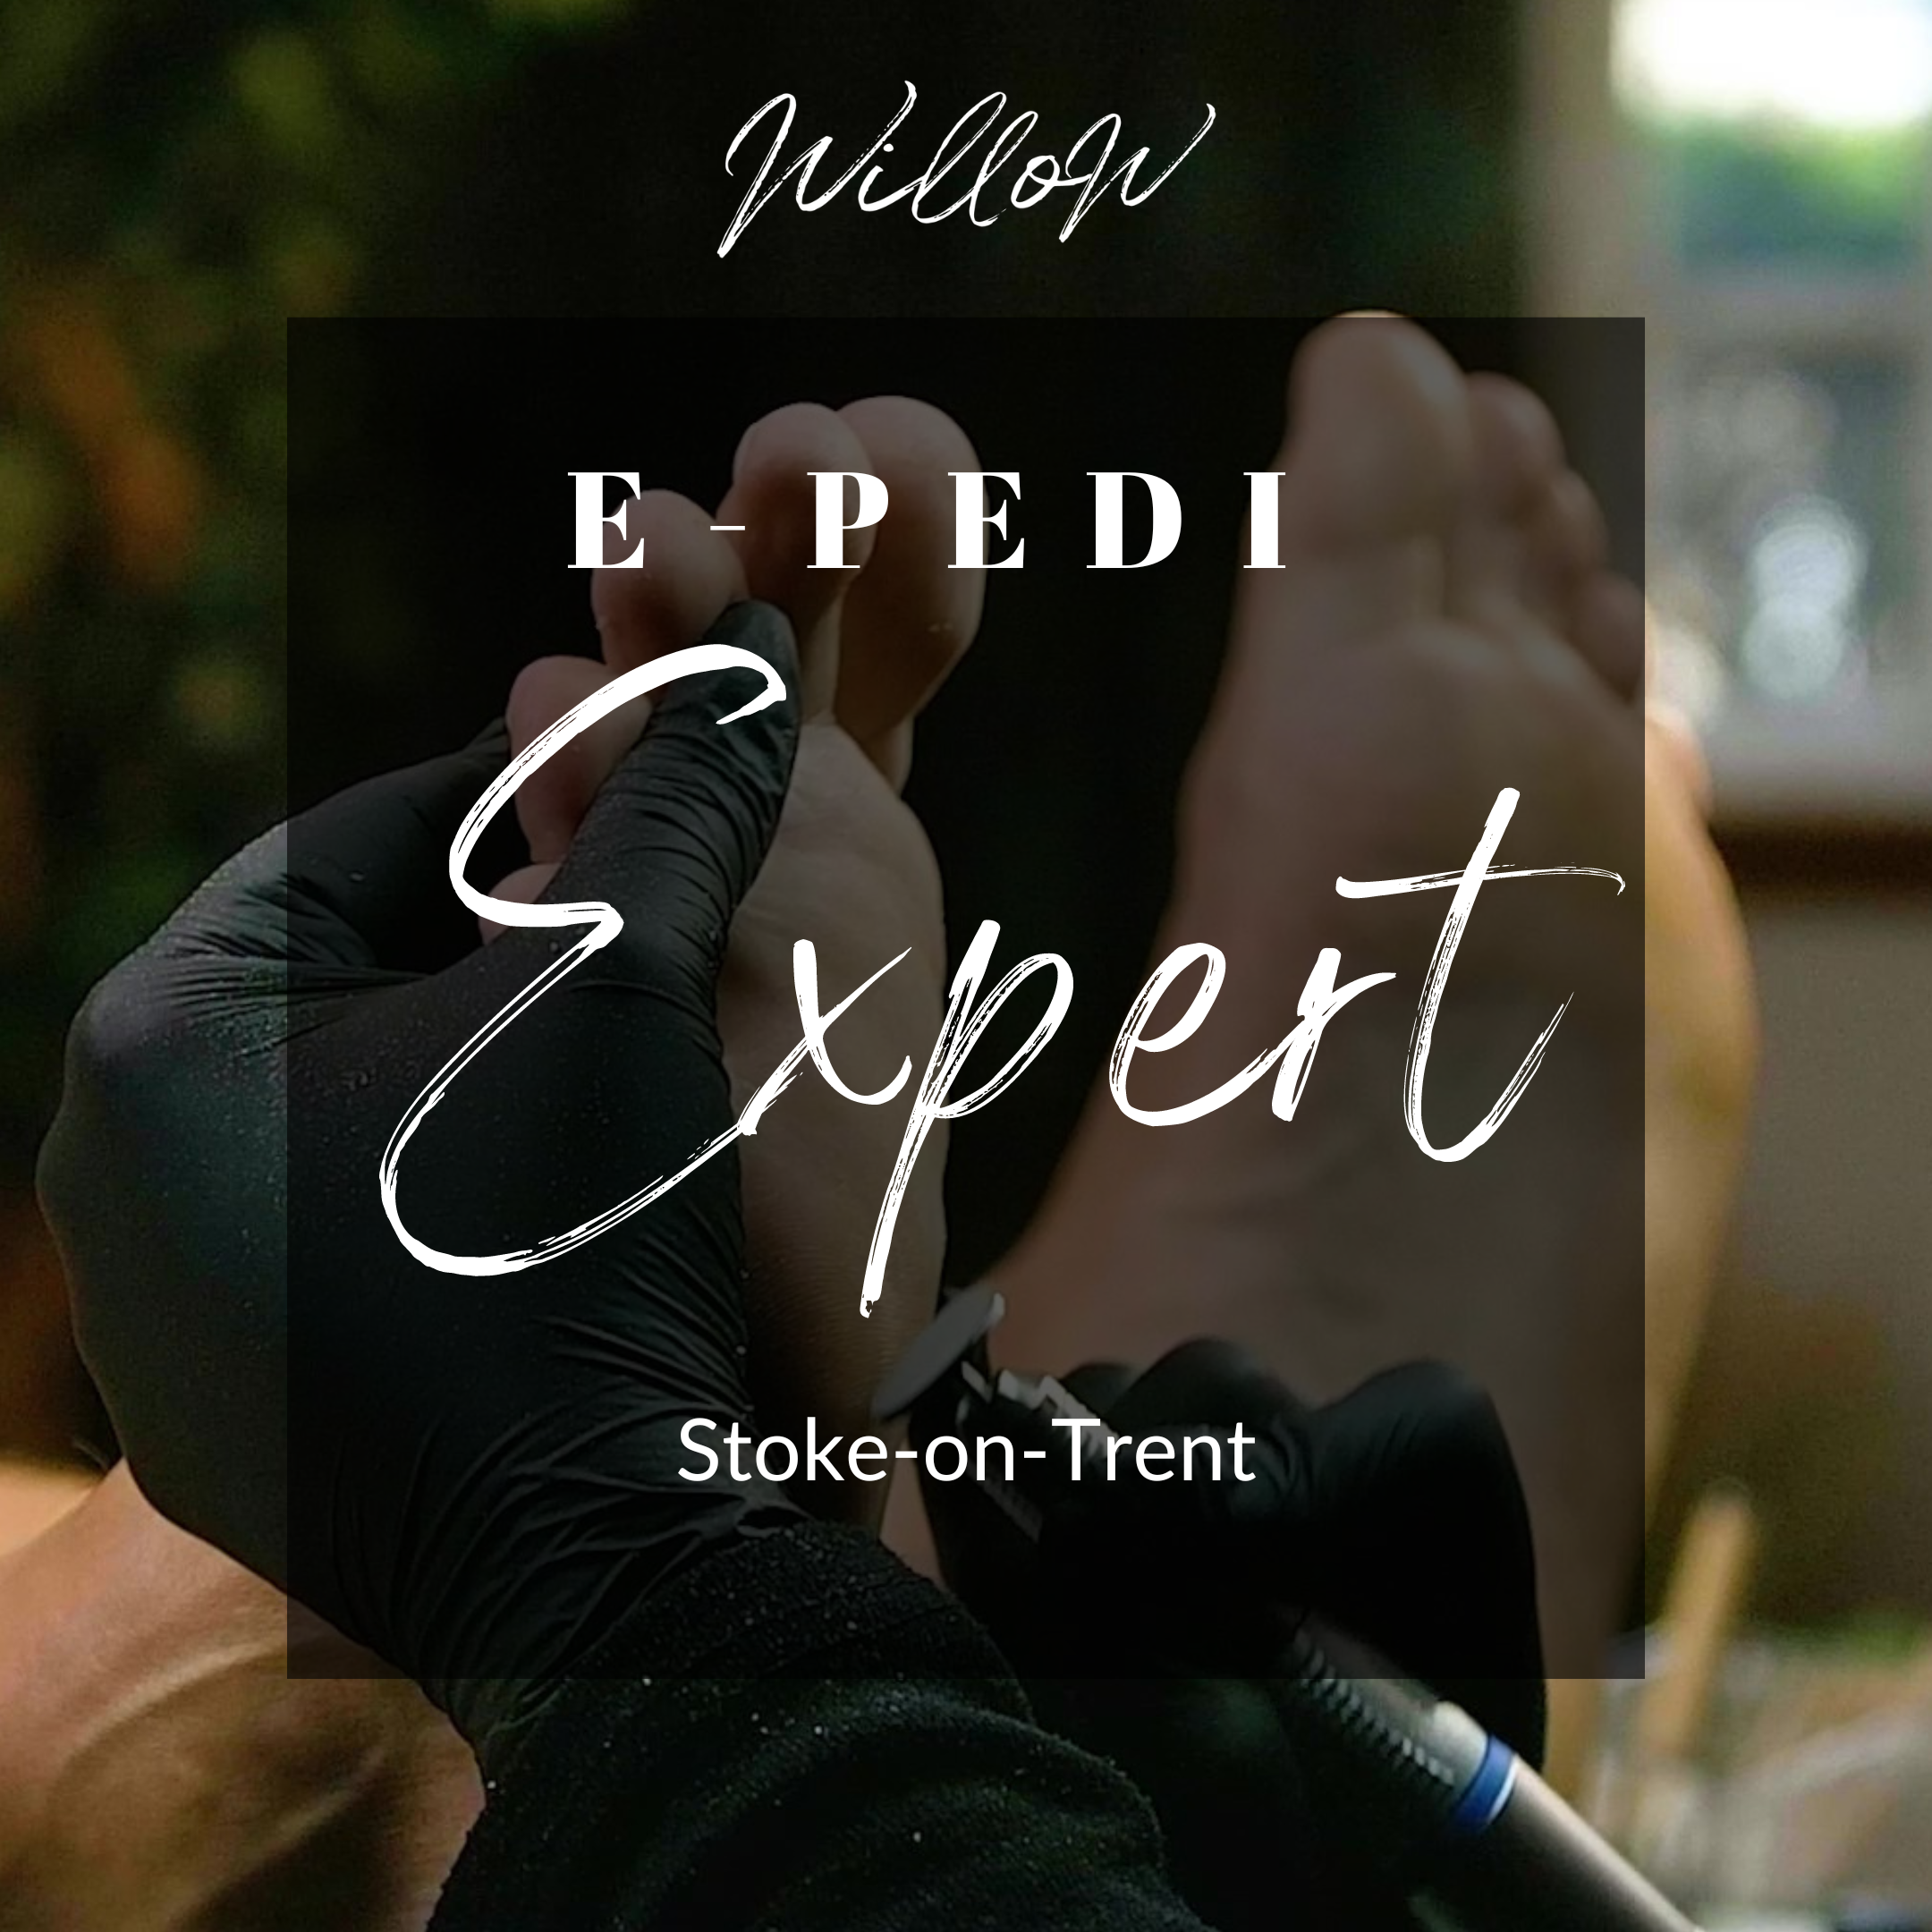 E-Pedi Expert Course - Stoke-on-Trent